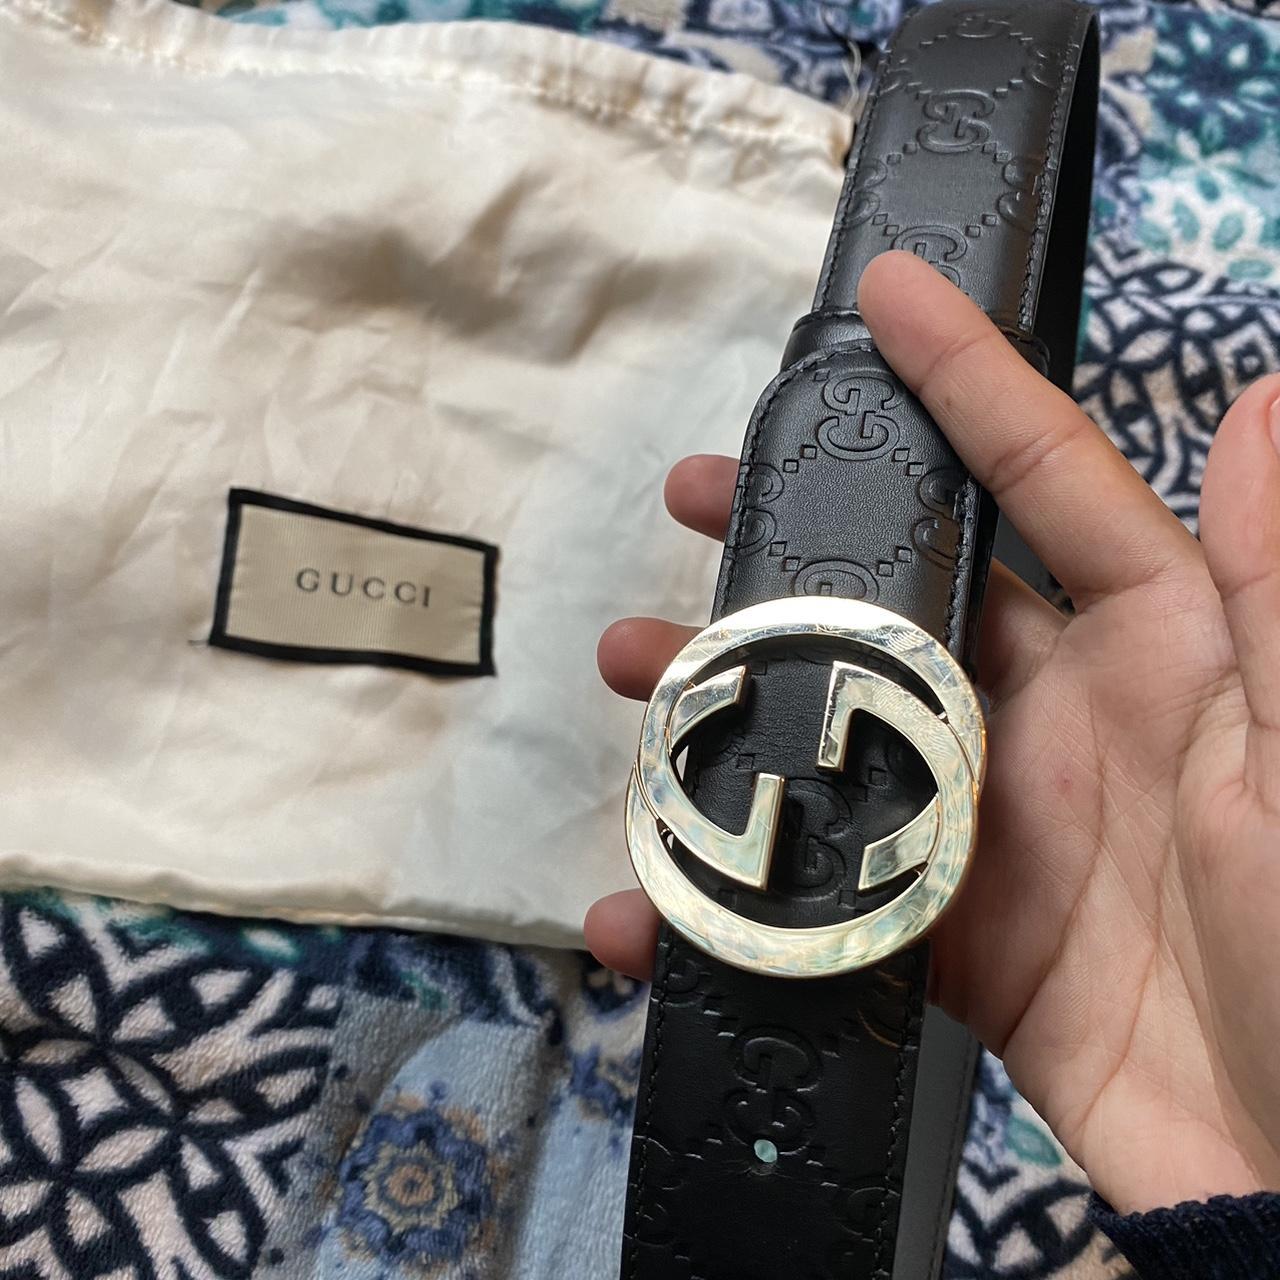 Black GG Supreme leather belt, Gucci